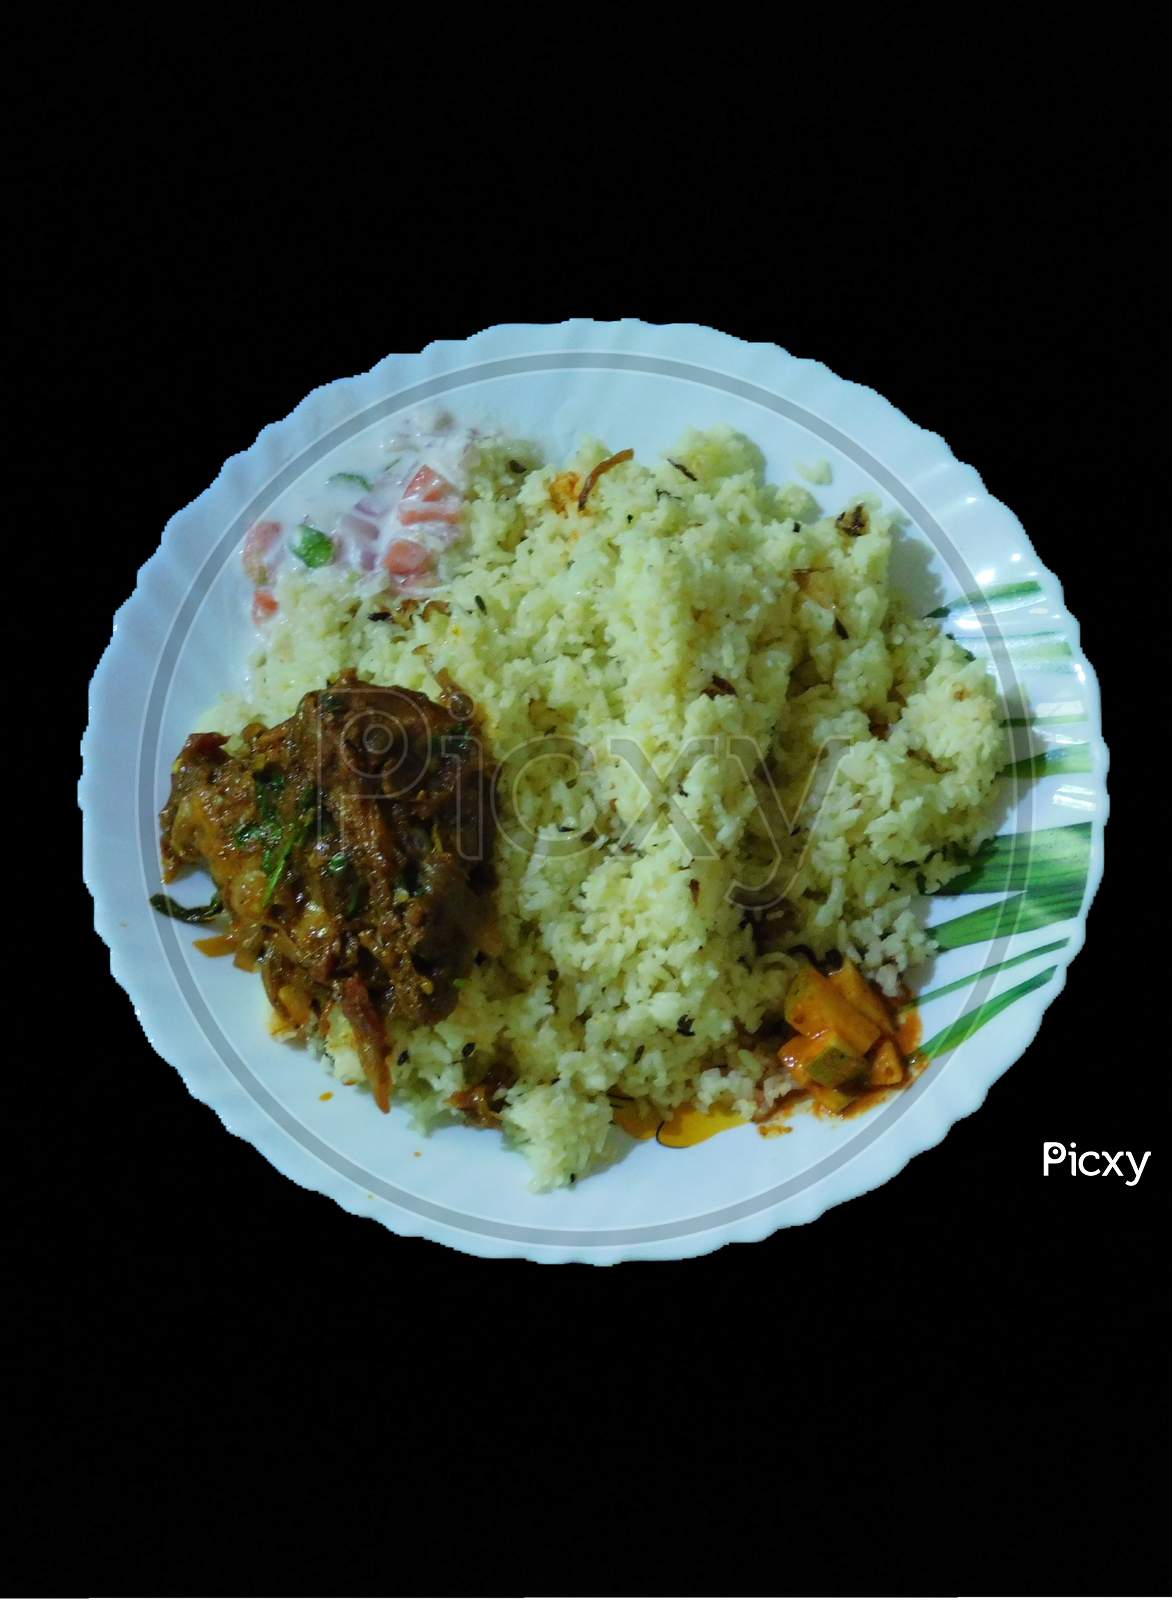 Delicious Food(Biriyani) In A White Bowl